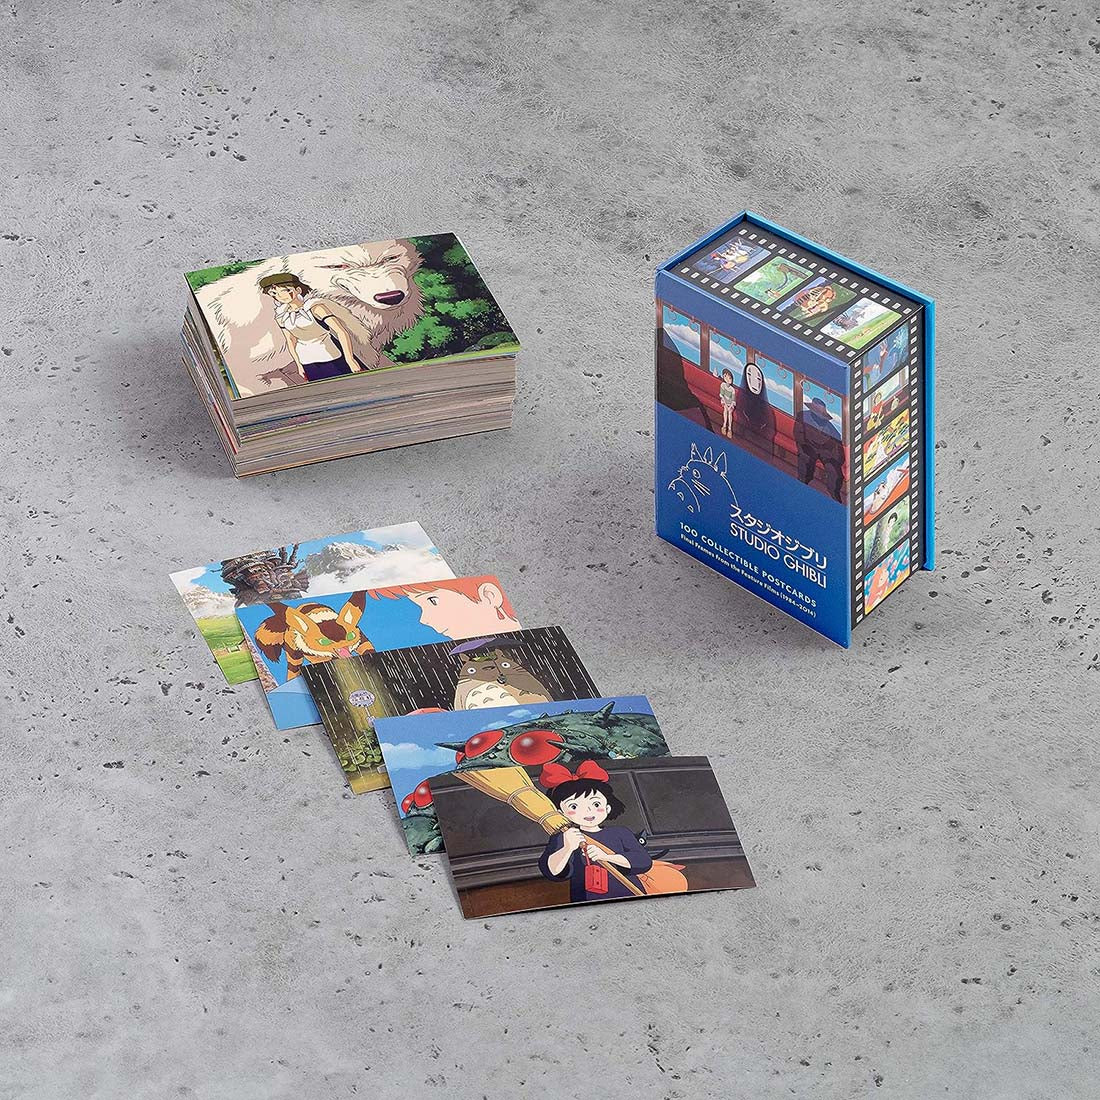 Fully Booked Has Studio Ghibli Postcards